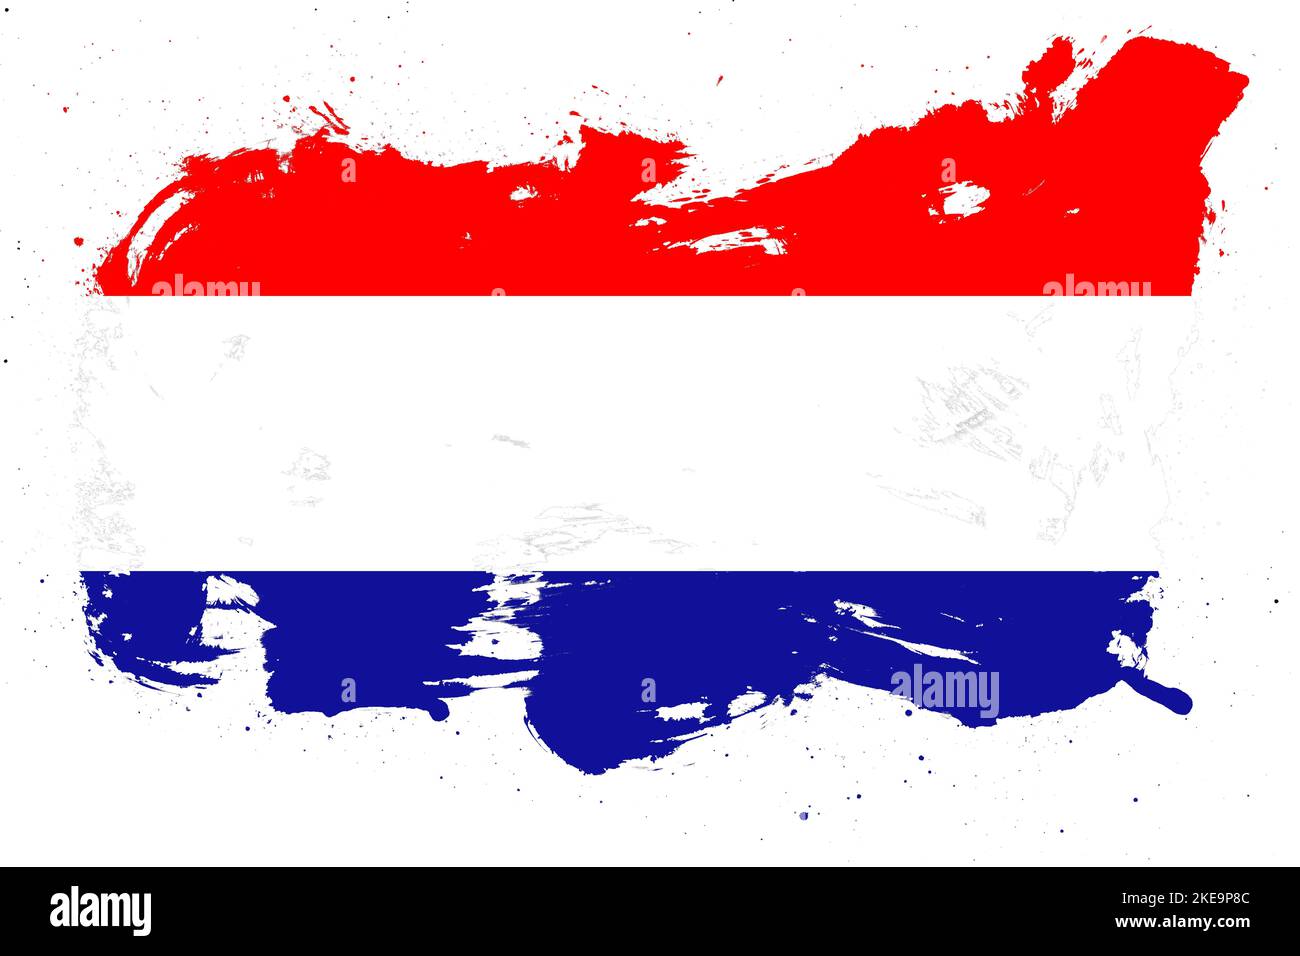 Croatia flag with painted grunge brush stroke effect on white background Stock Photo